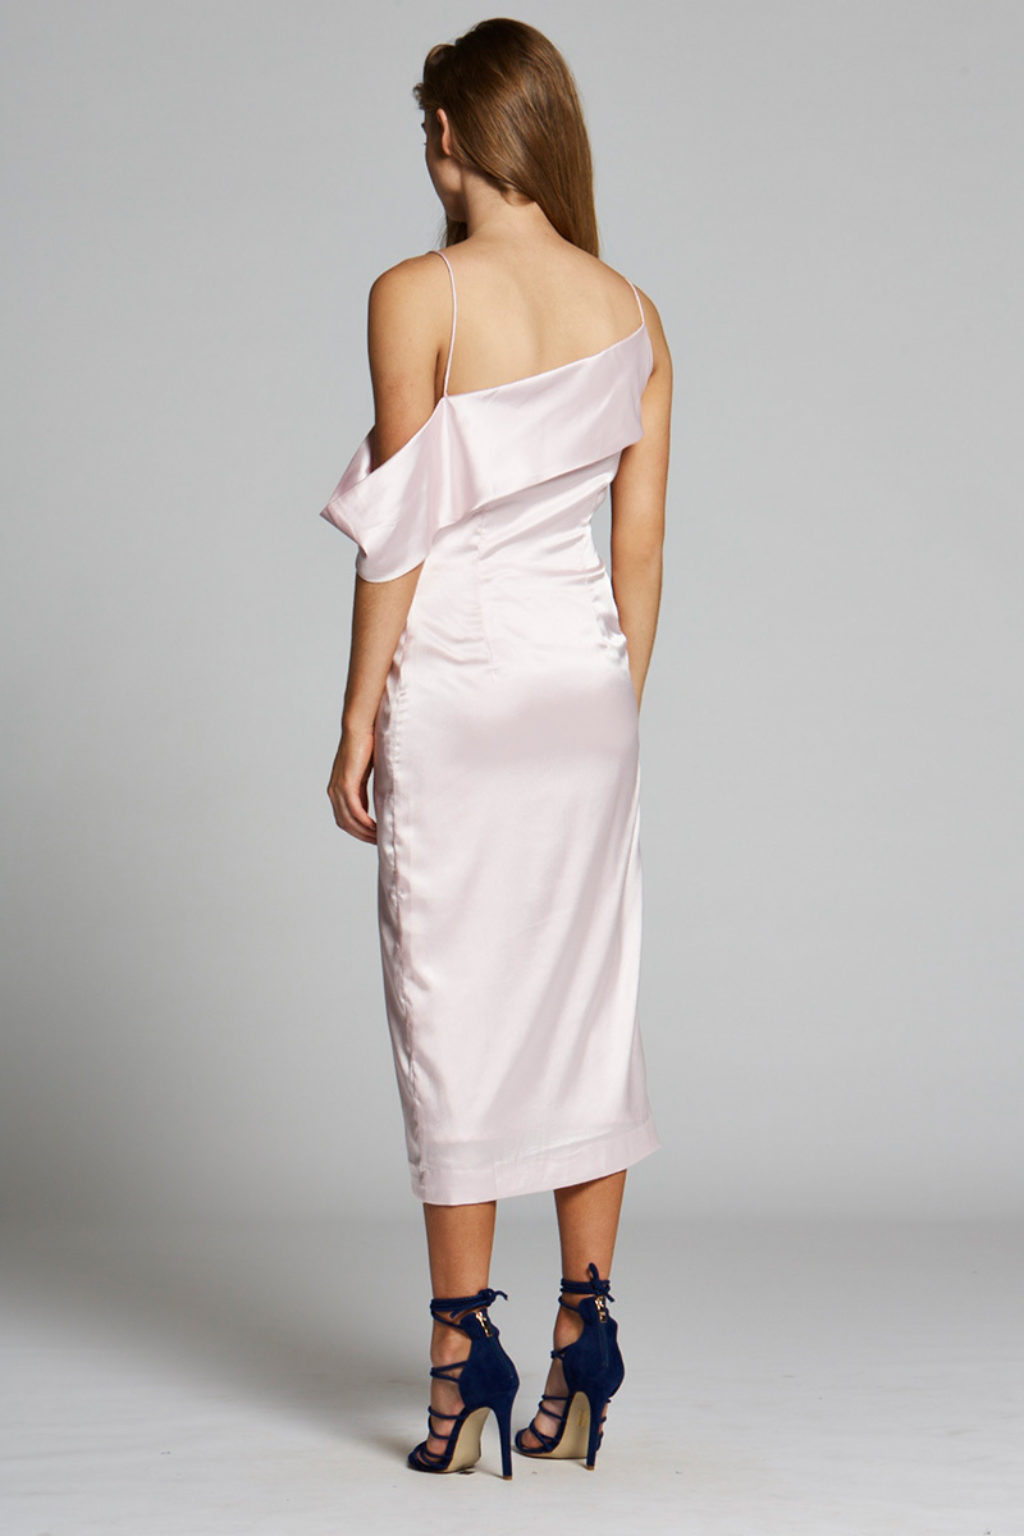 Noa Dress SALE WAS $209 | The Style Capsule